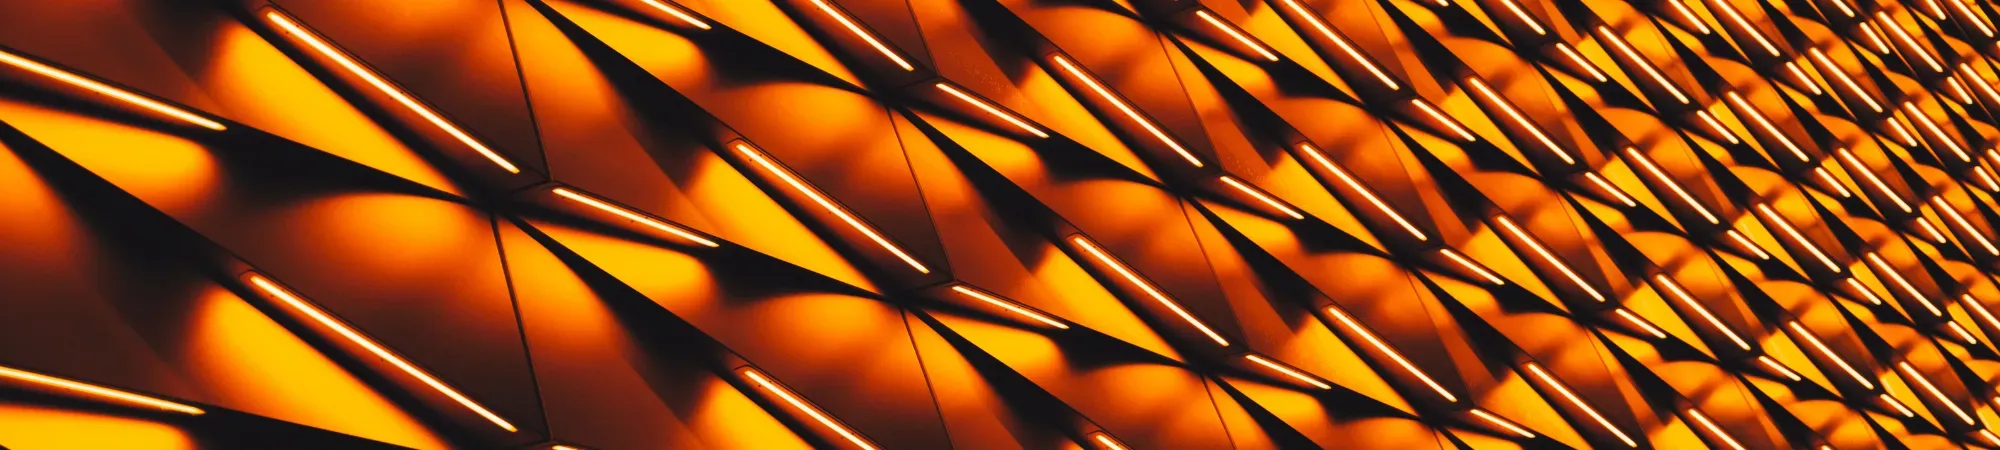 Abstract orange panels